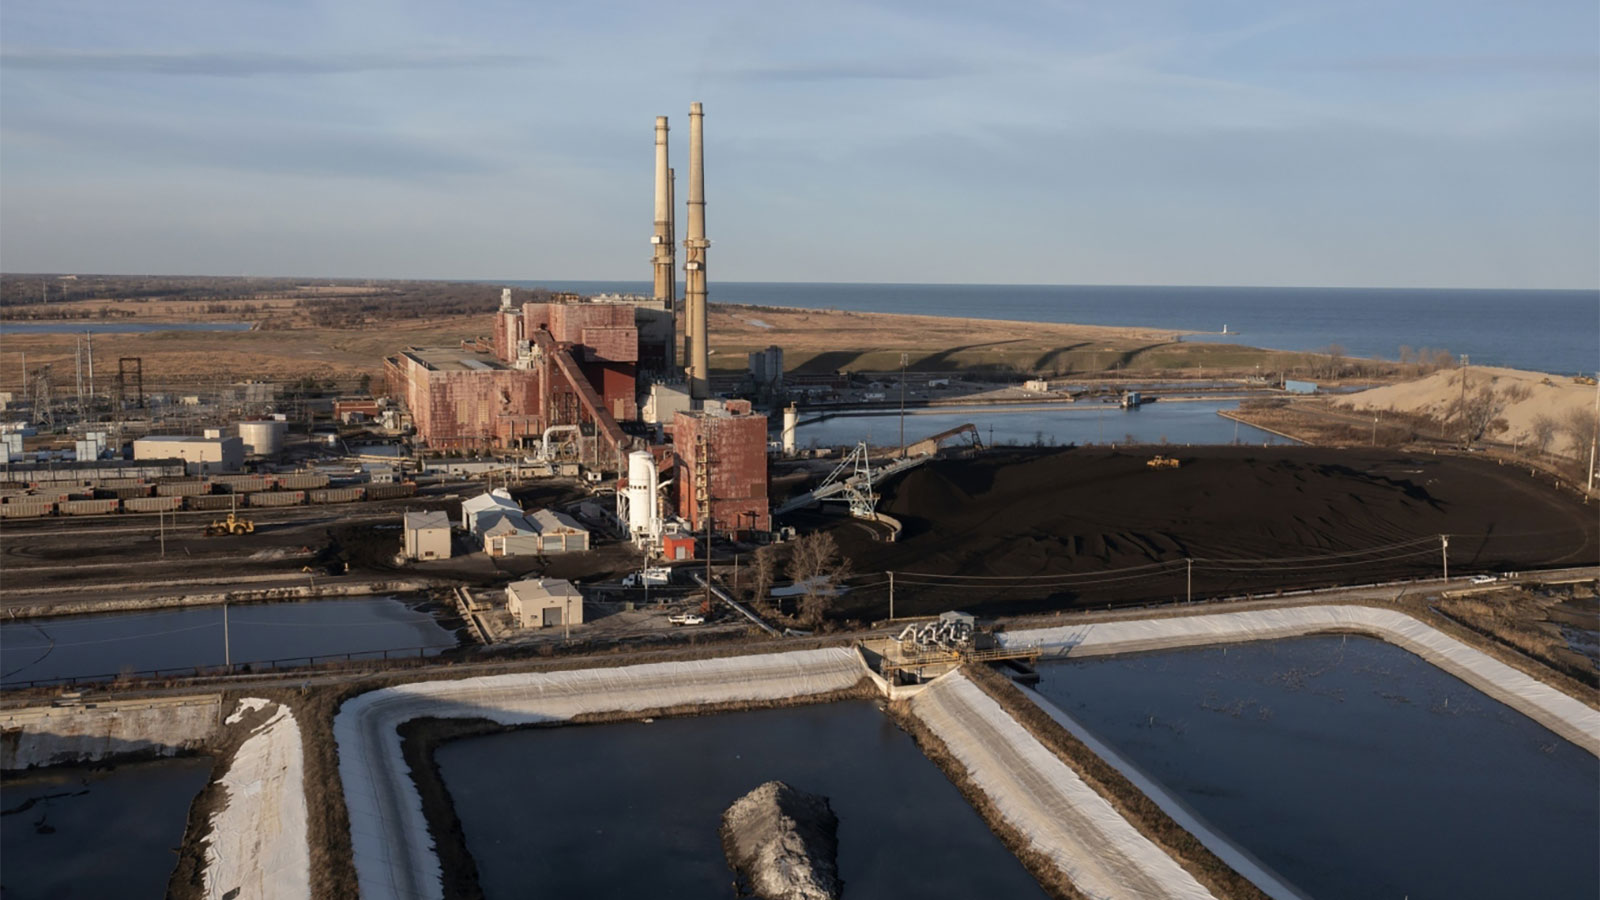 ponds filled dark liquid next to smoke stacks of coal plant next to Lake Michigan